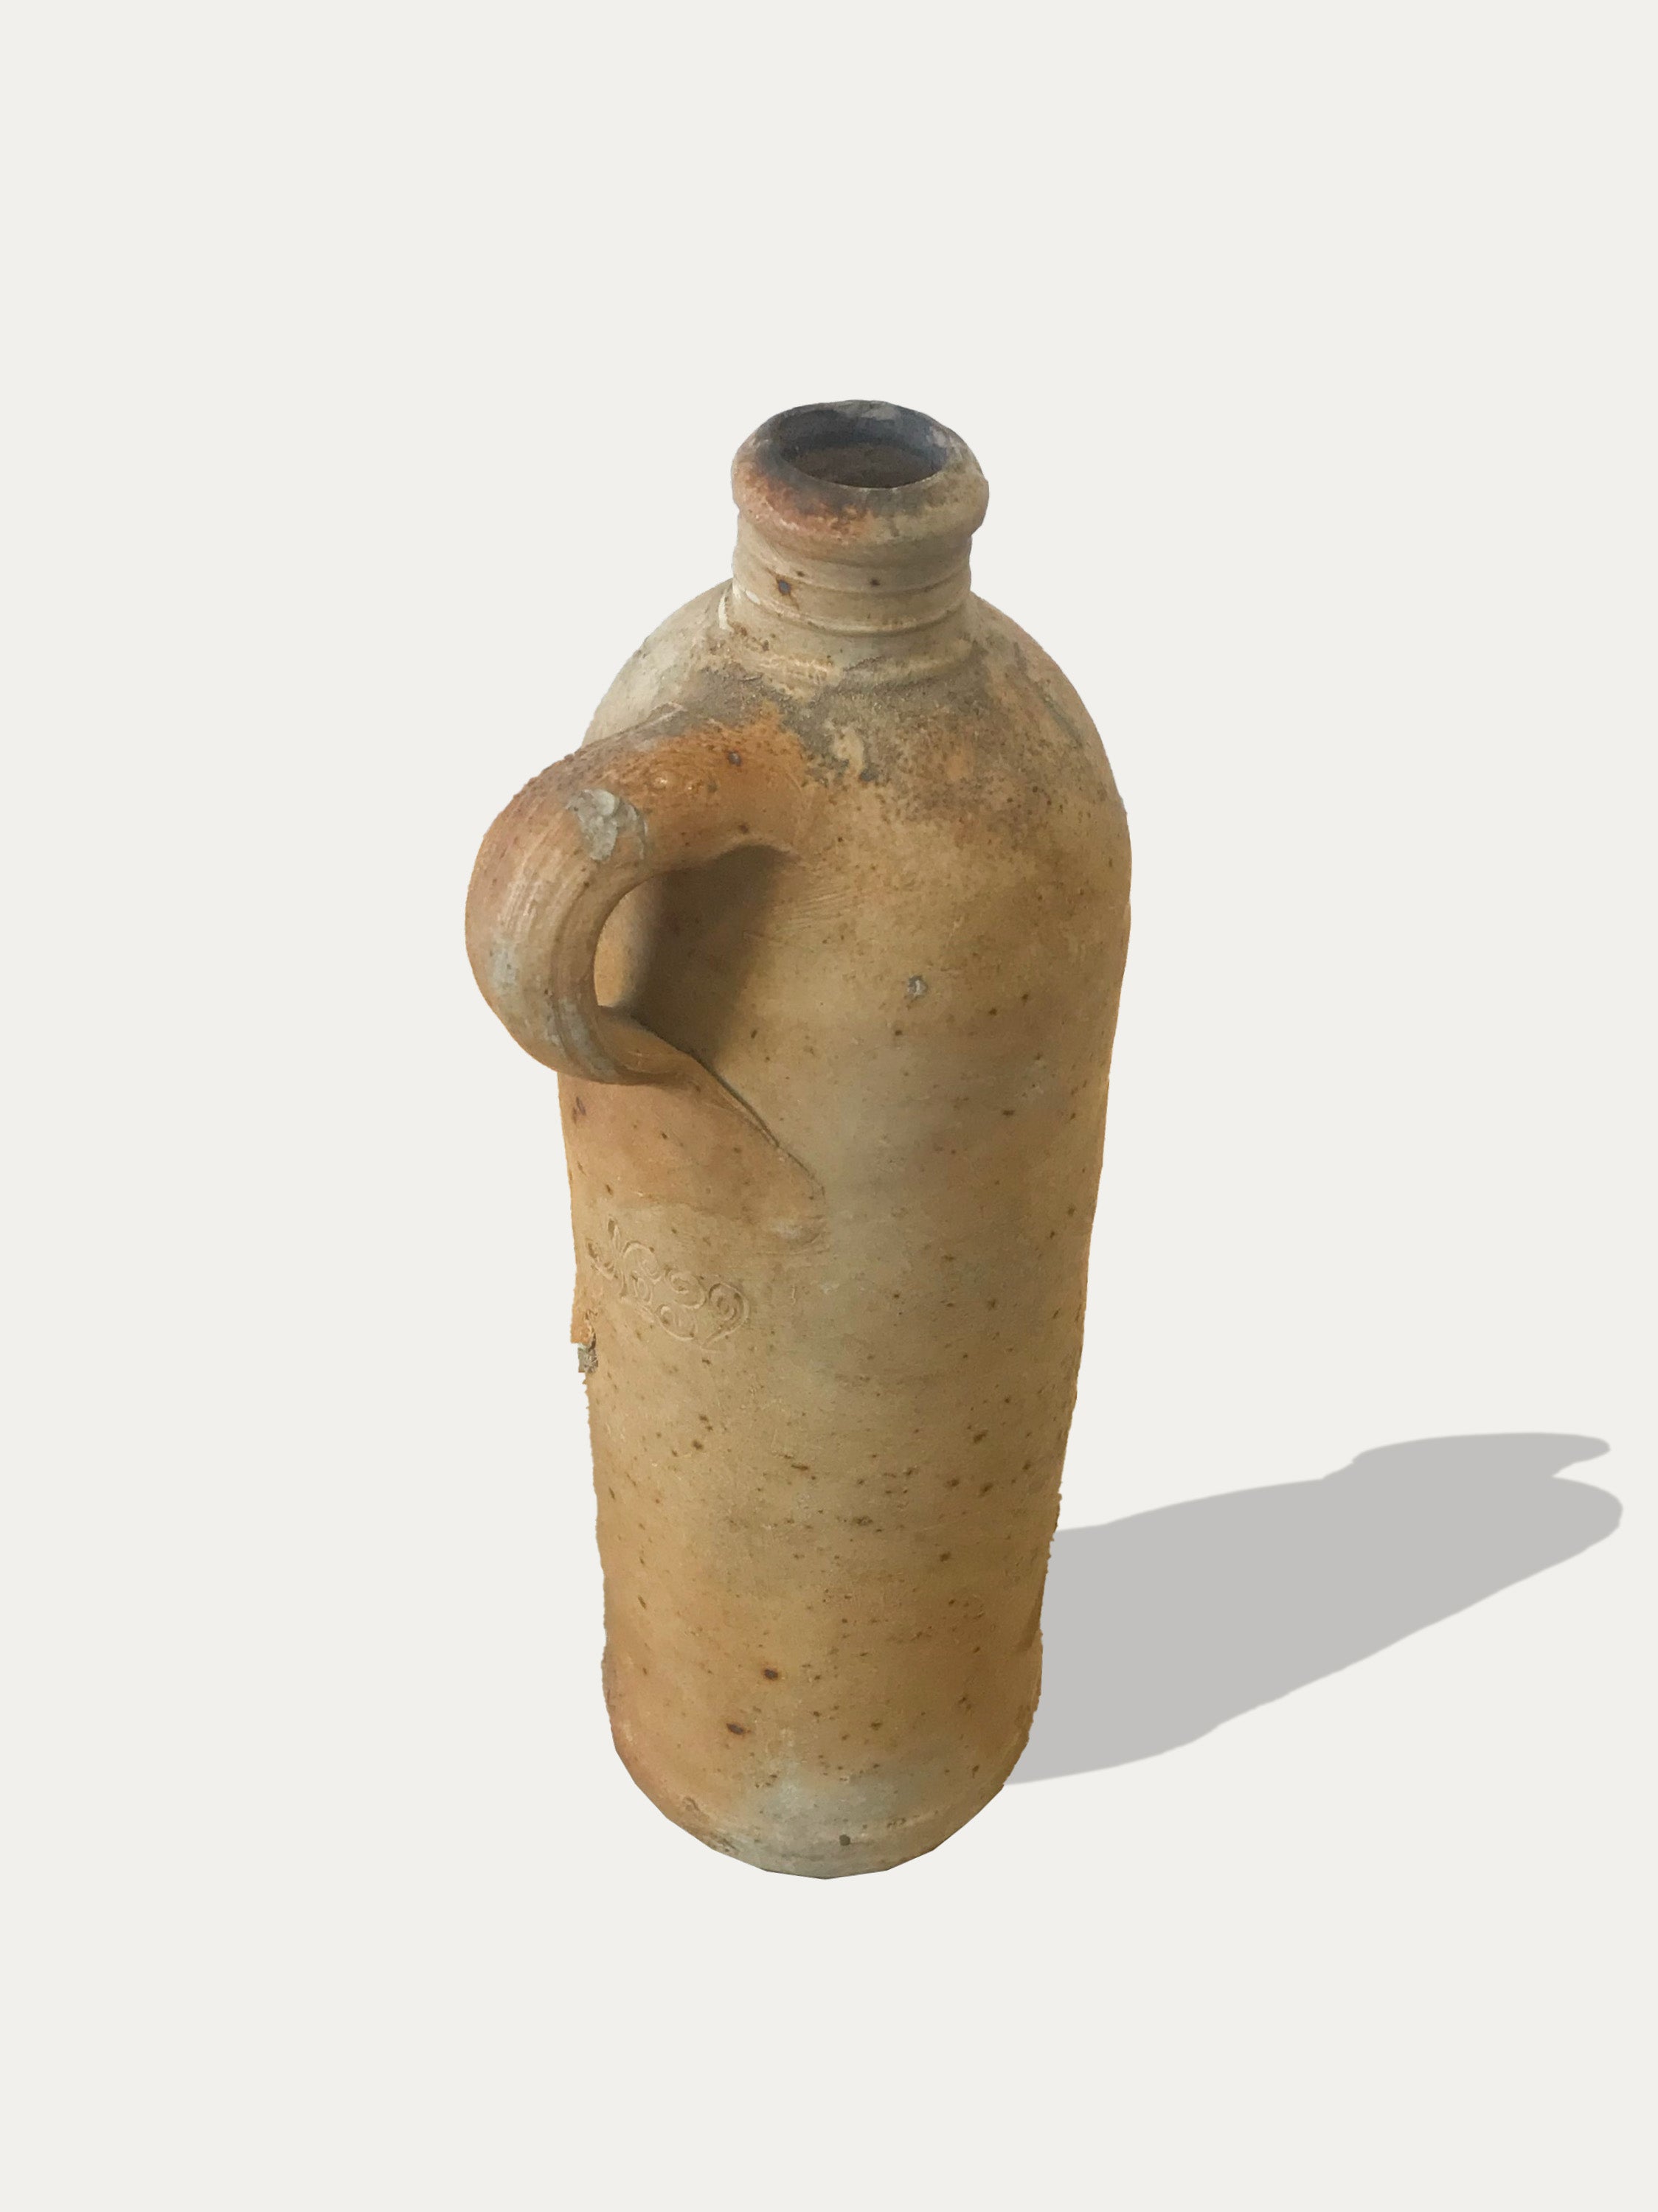 Terracotta Water jug from Borneo - Asian art from Kirschon